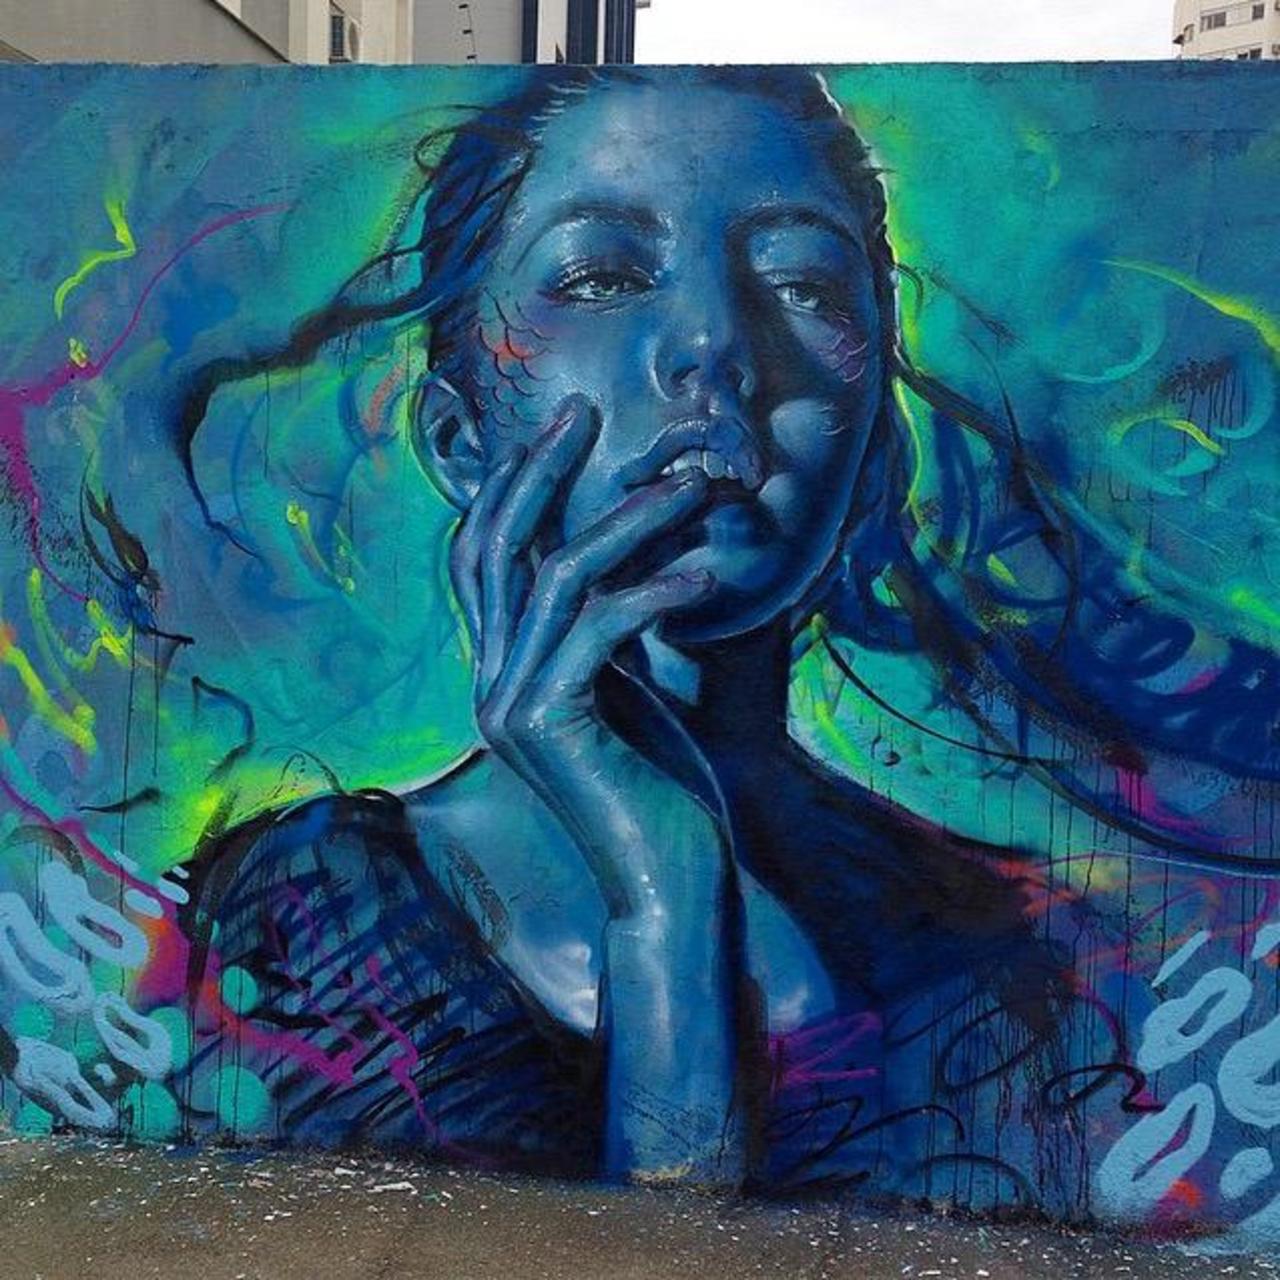 Thiago Valdi new Street Art piece titled 'Day Dreamer'

#art #mural #graffiti #streetart http://t.co/B8ESq0Ovhs